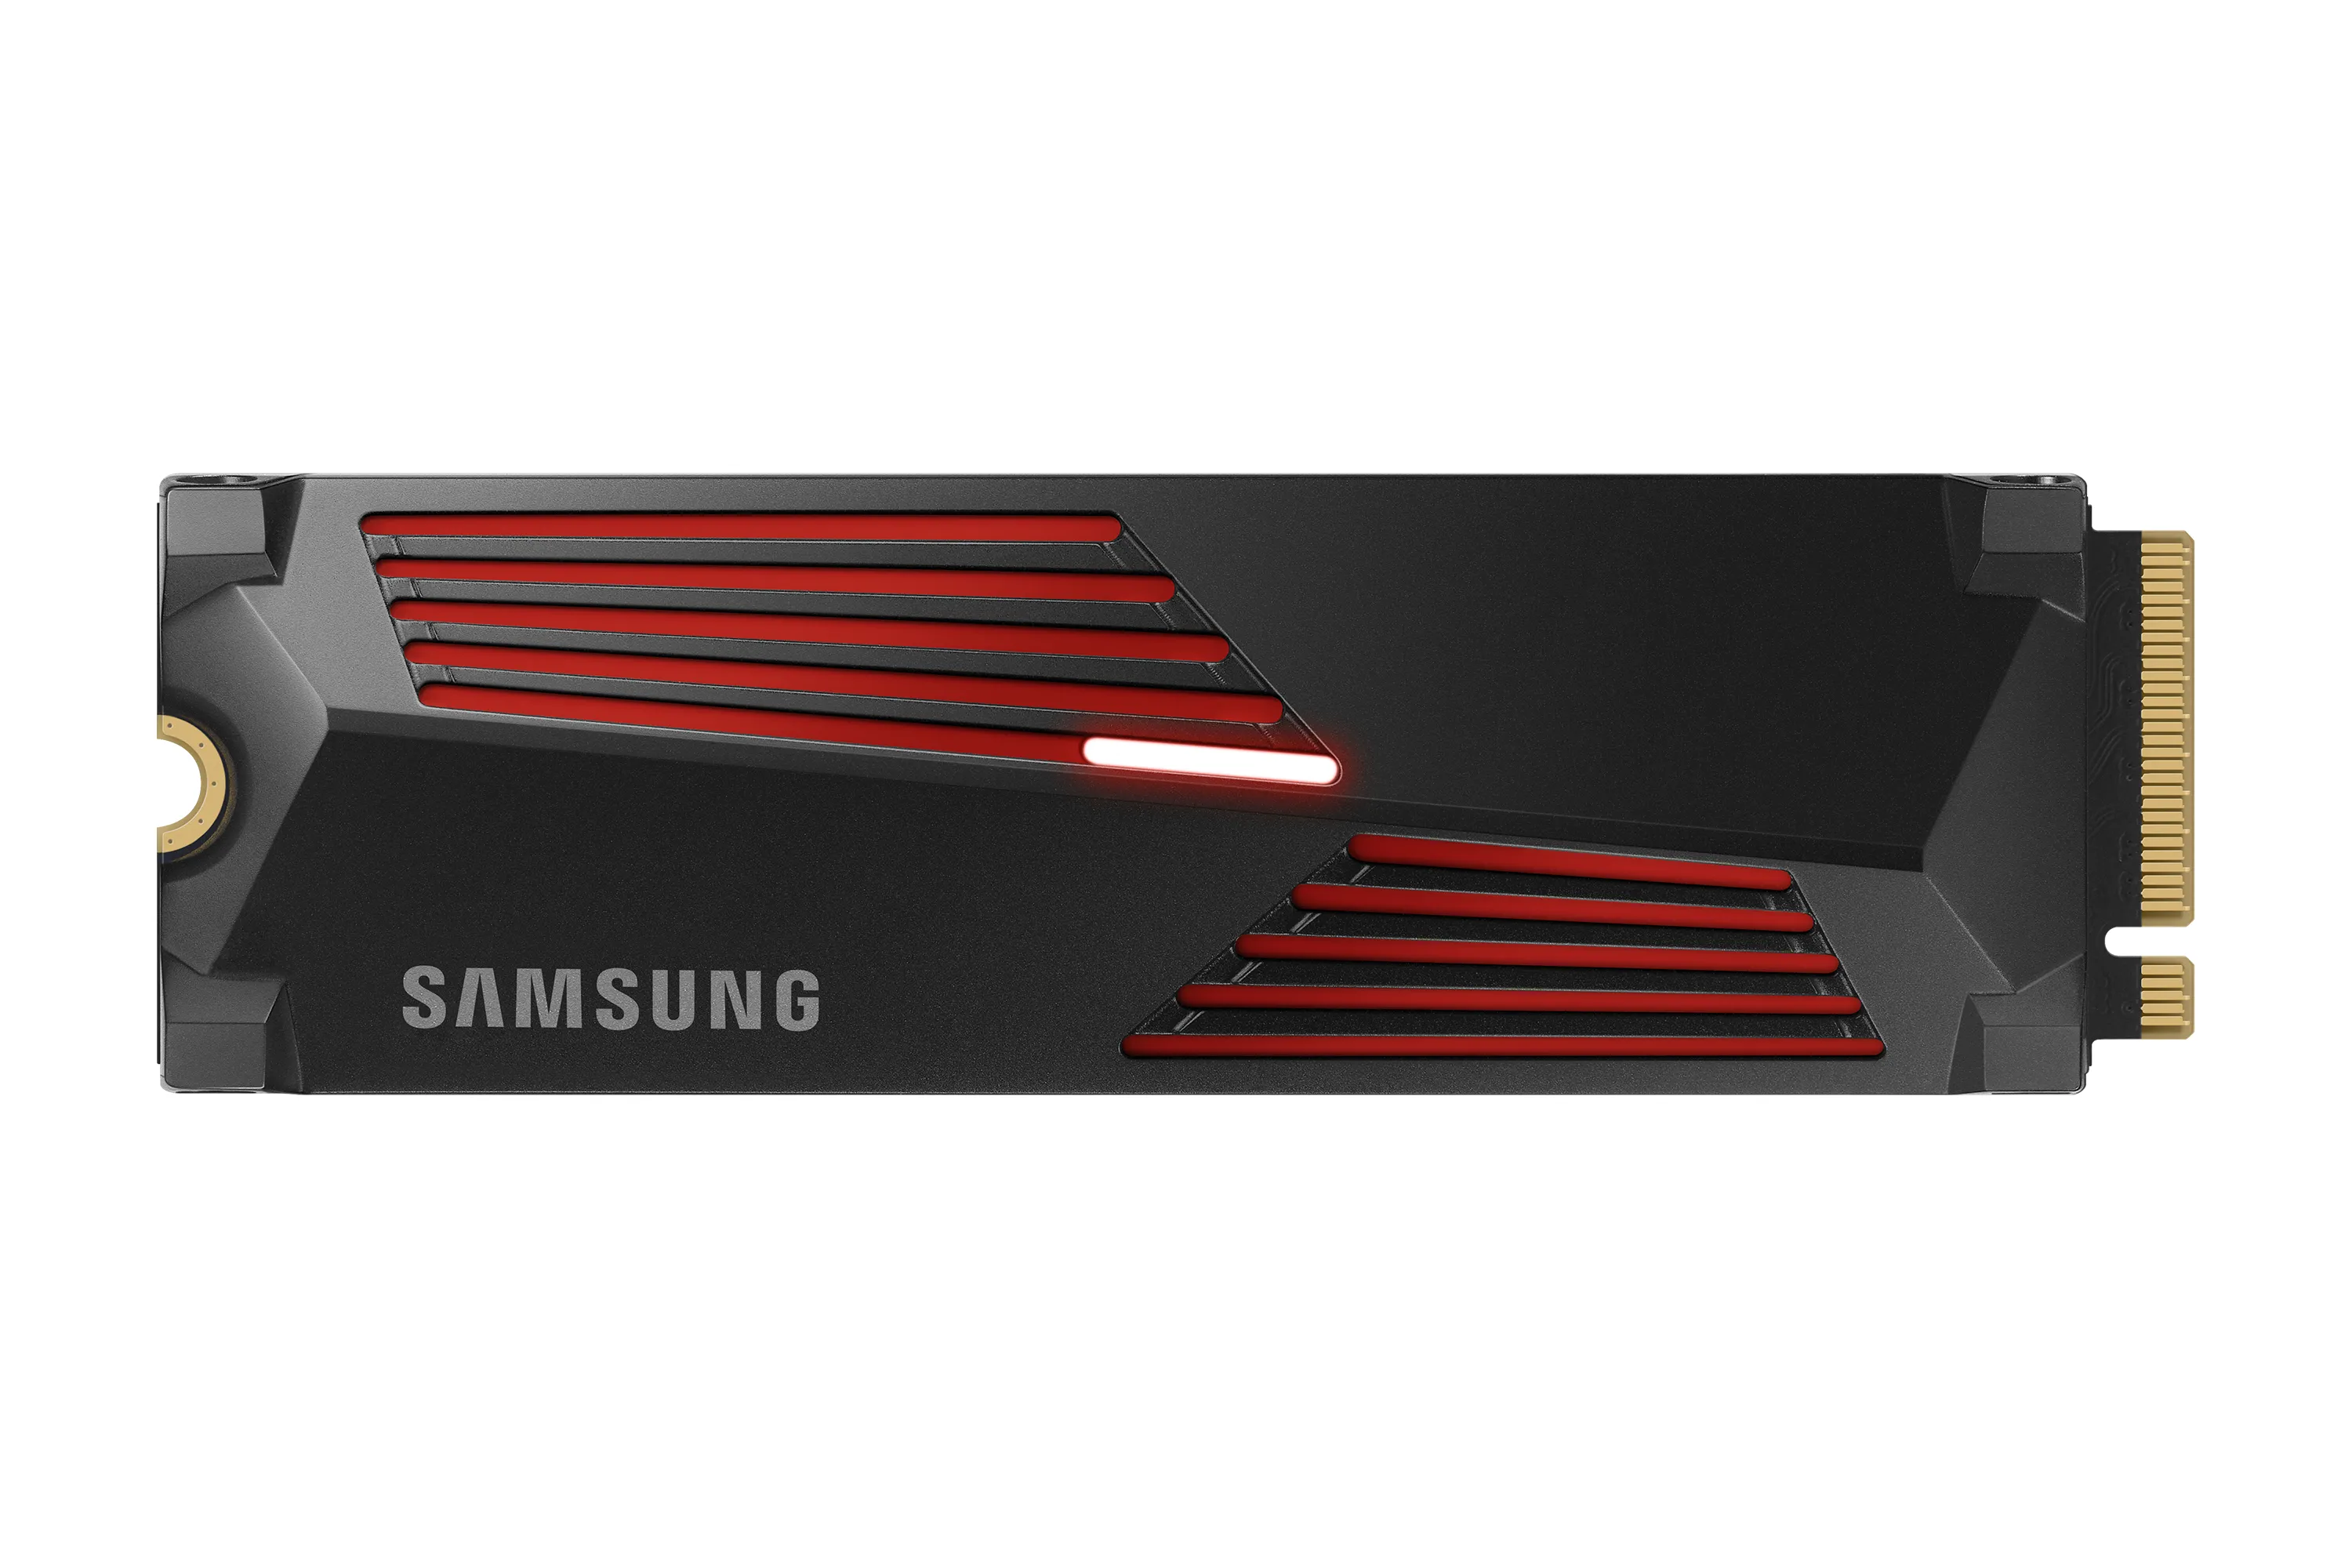 Vente SAMSUNG 990 Pro SSD 4To M.2 2280 PCIe Samsung au meilleur prix - visuel 8